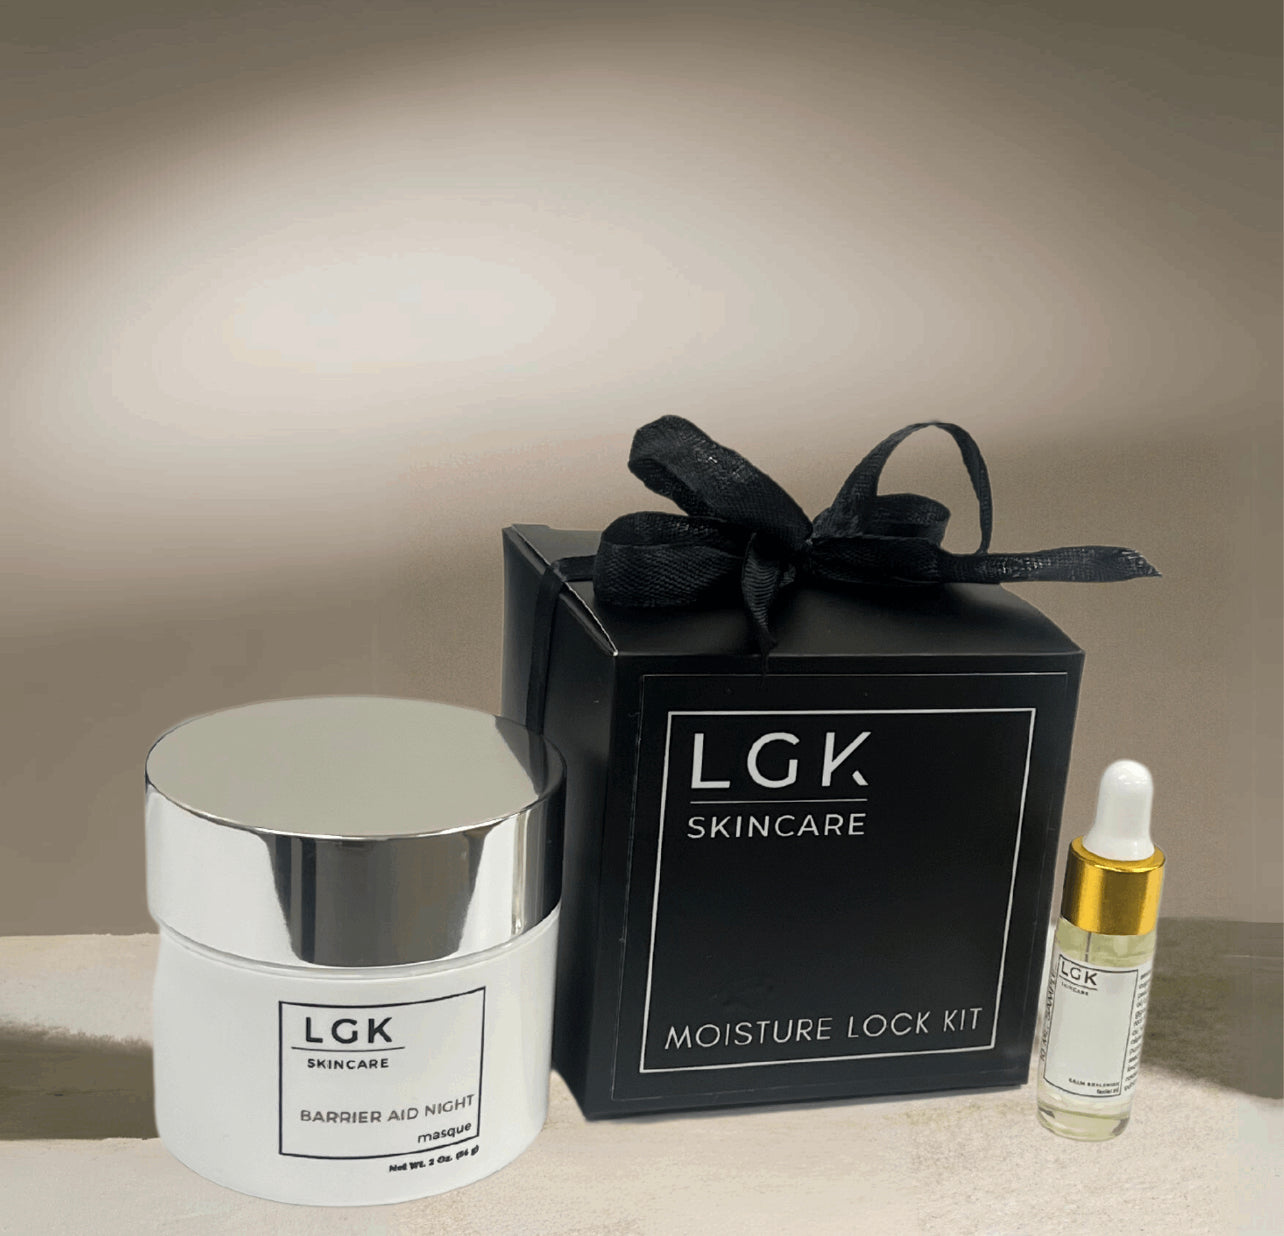 Moisture Lock Kit LGK Skincare